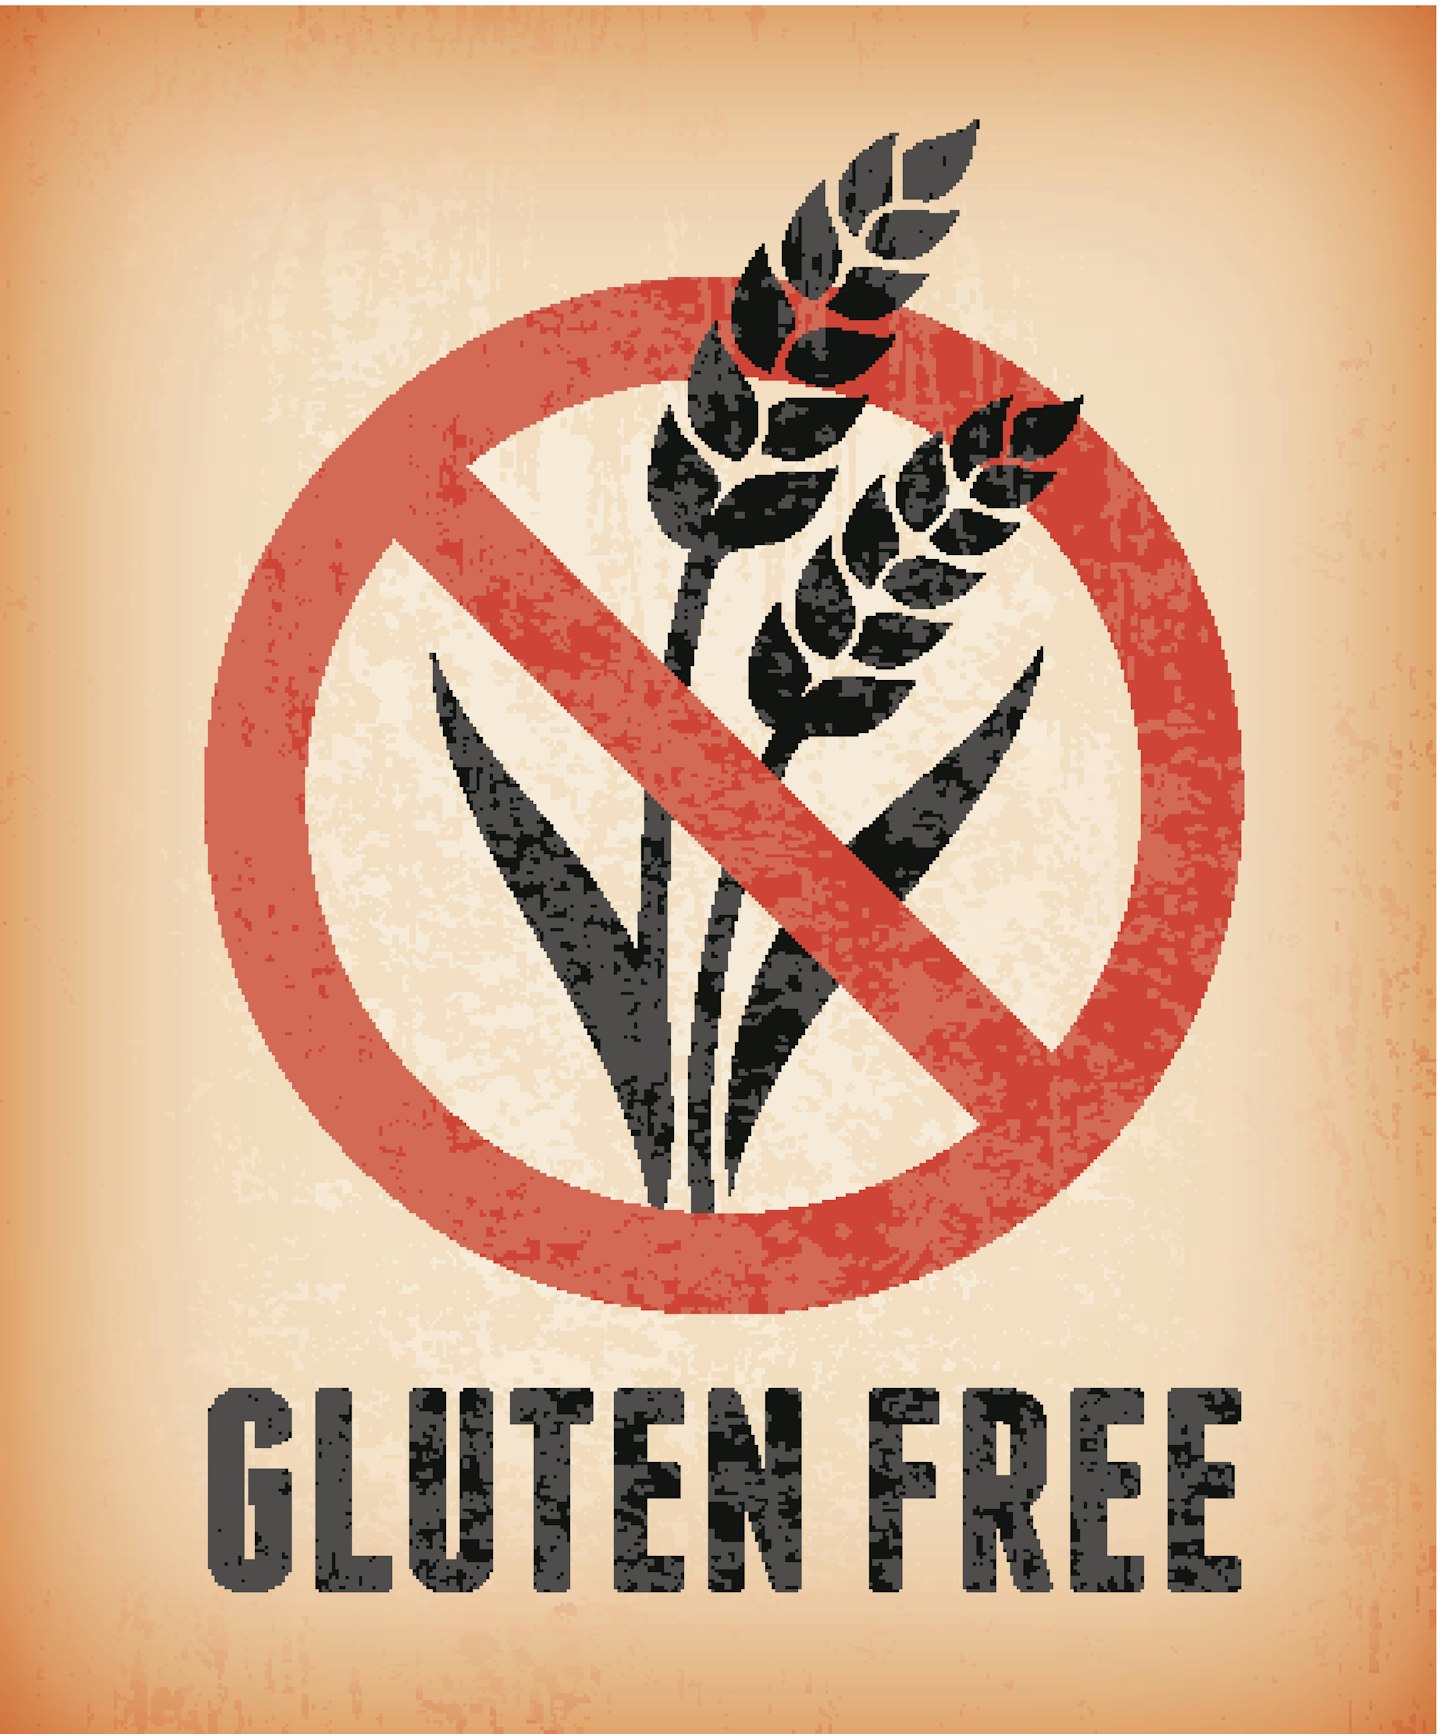 gluten-free grains wheat barley 